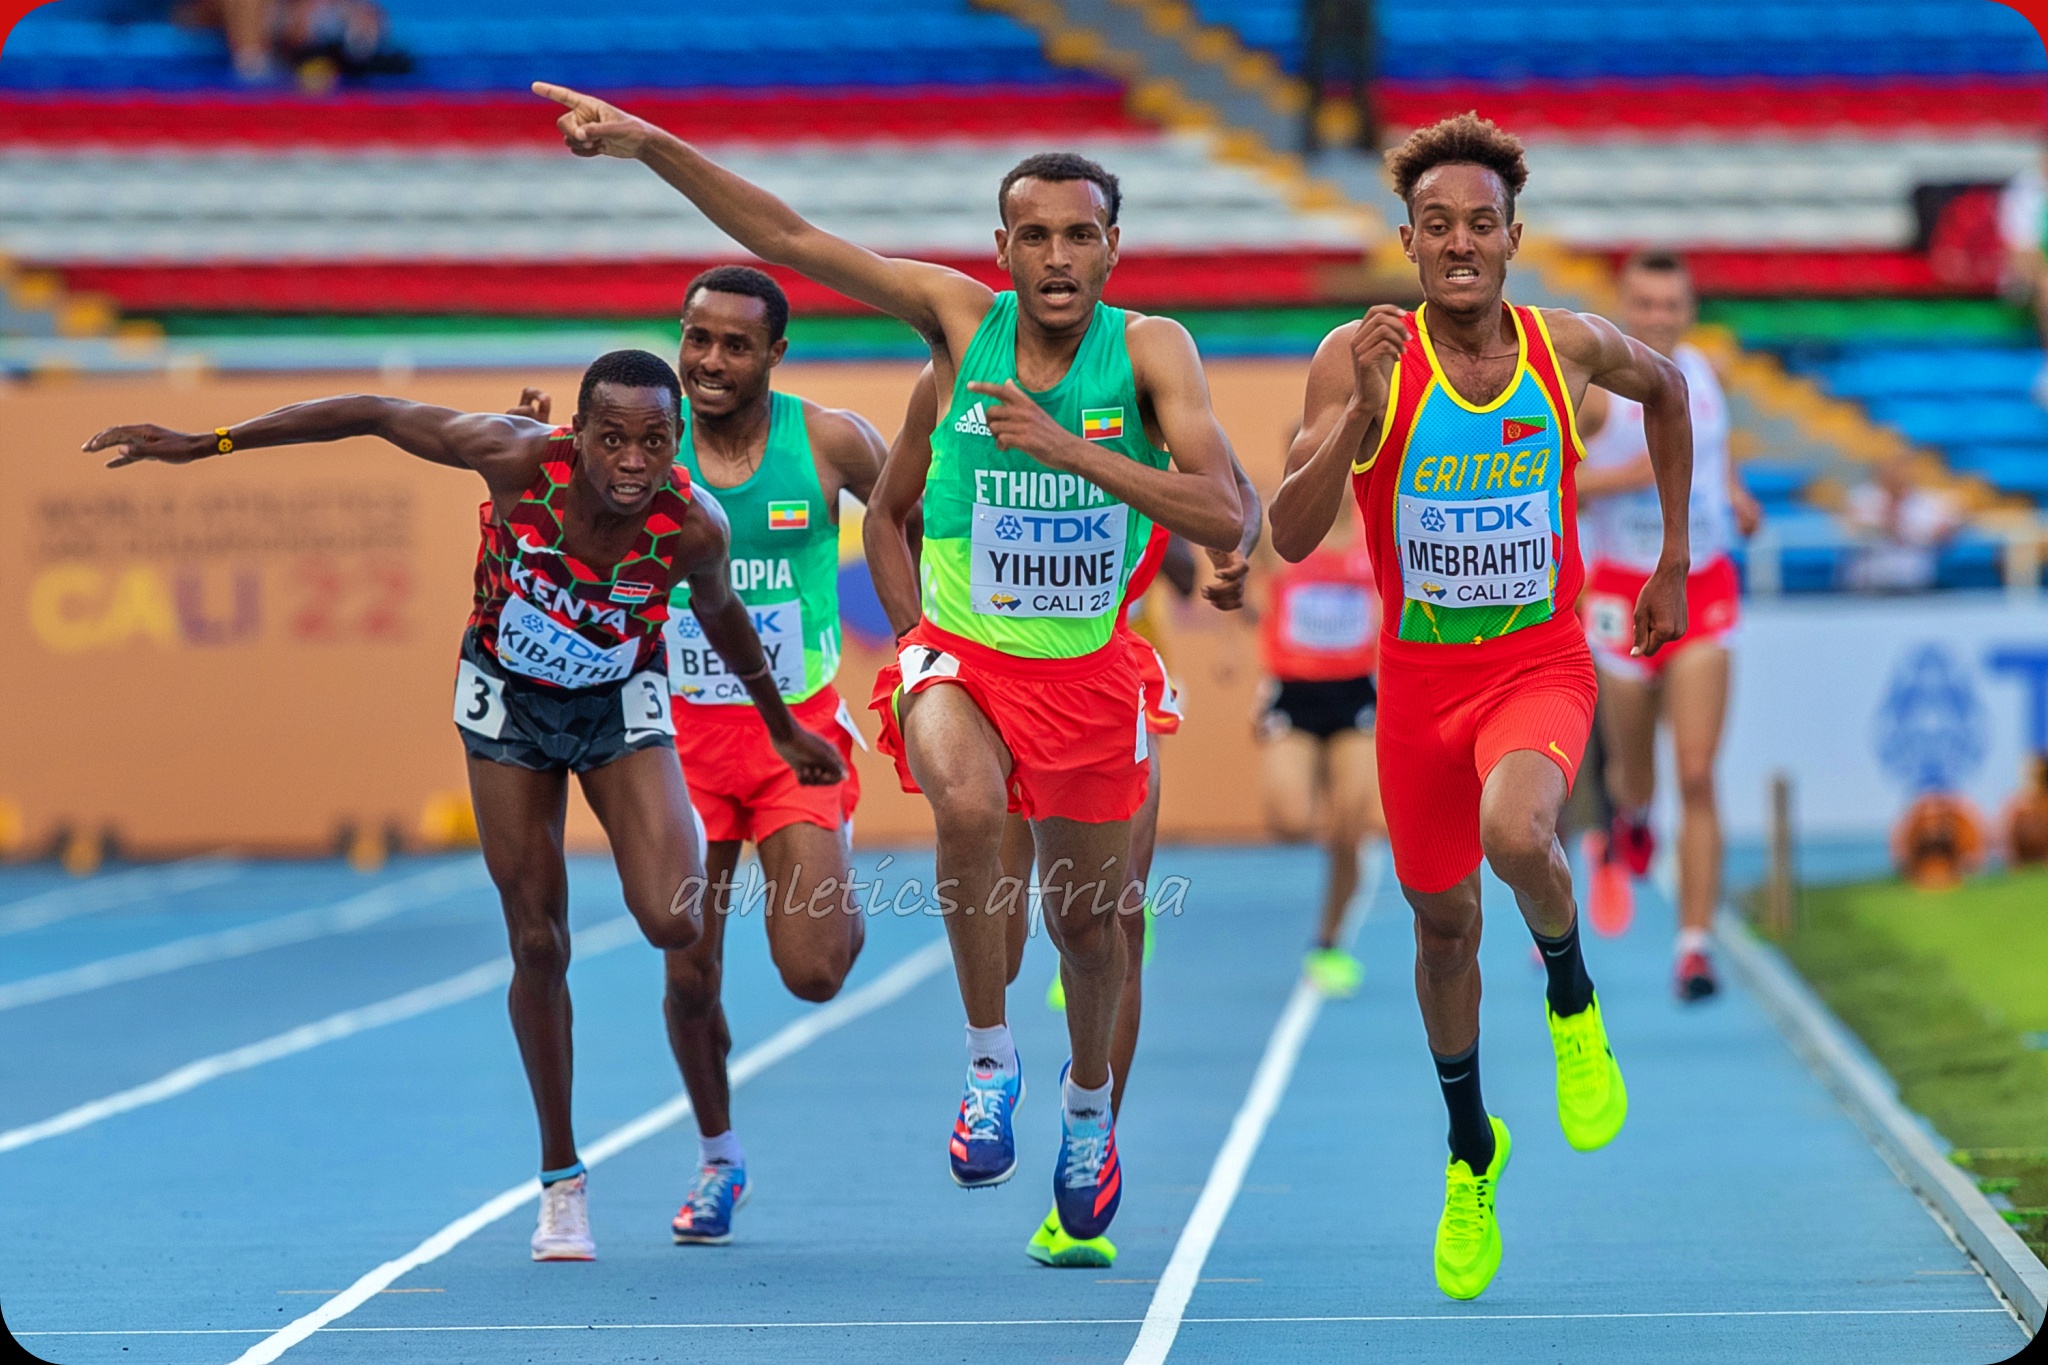 Ethiopia's Addisu Yihune wins the men's 5000m at the World Athletics U20 Championships Cali 22 / Photo credit: Oscar Munoz Badilla